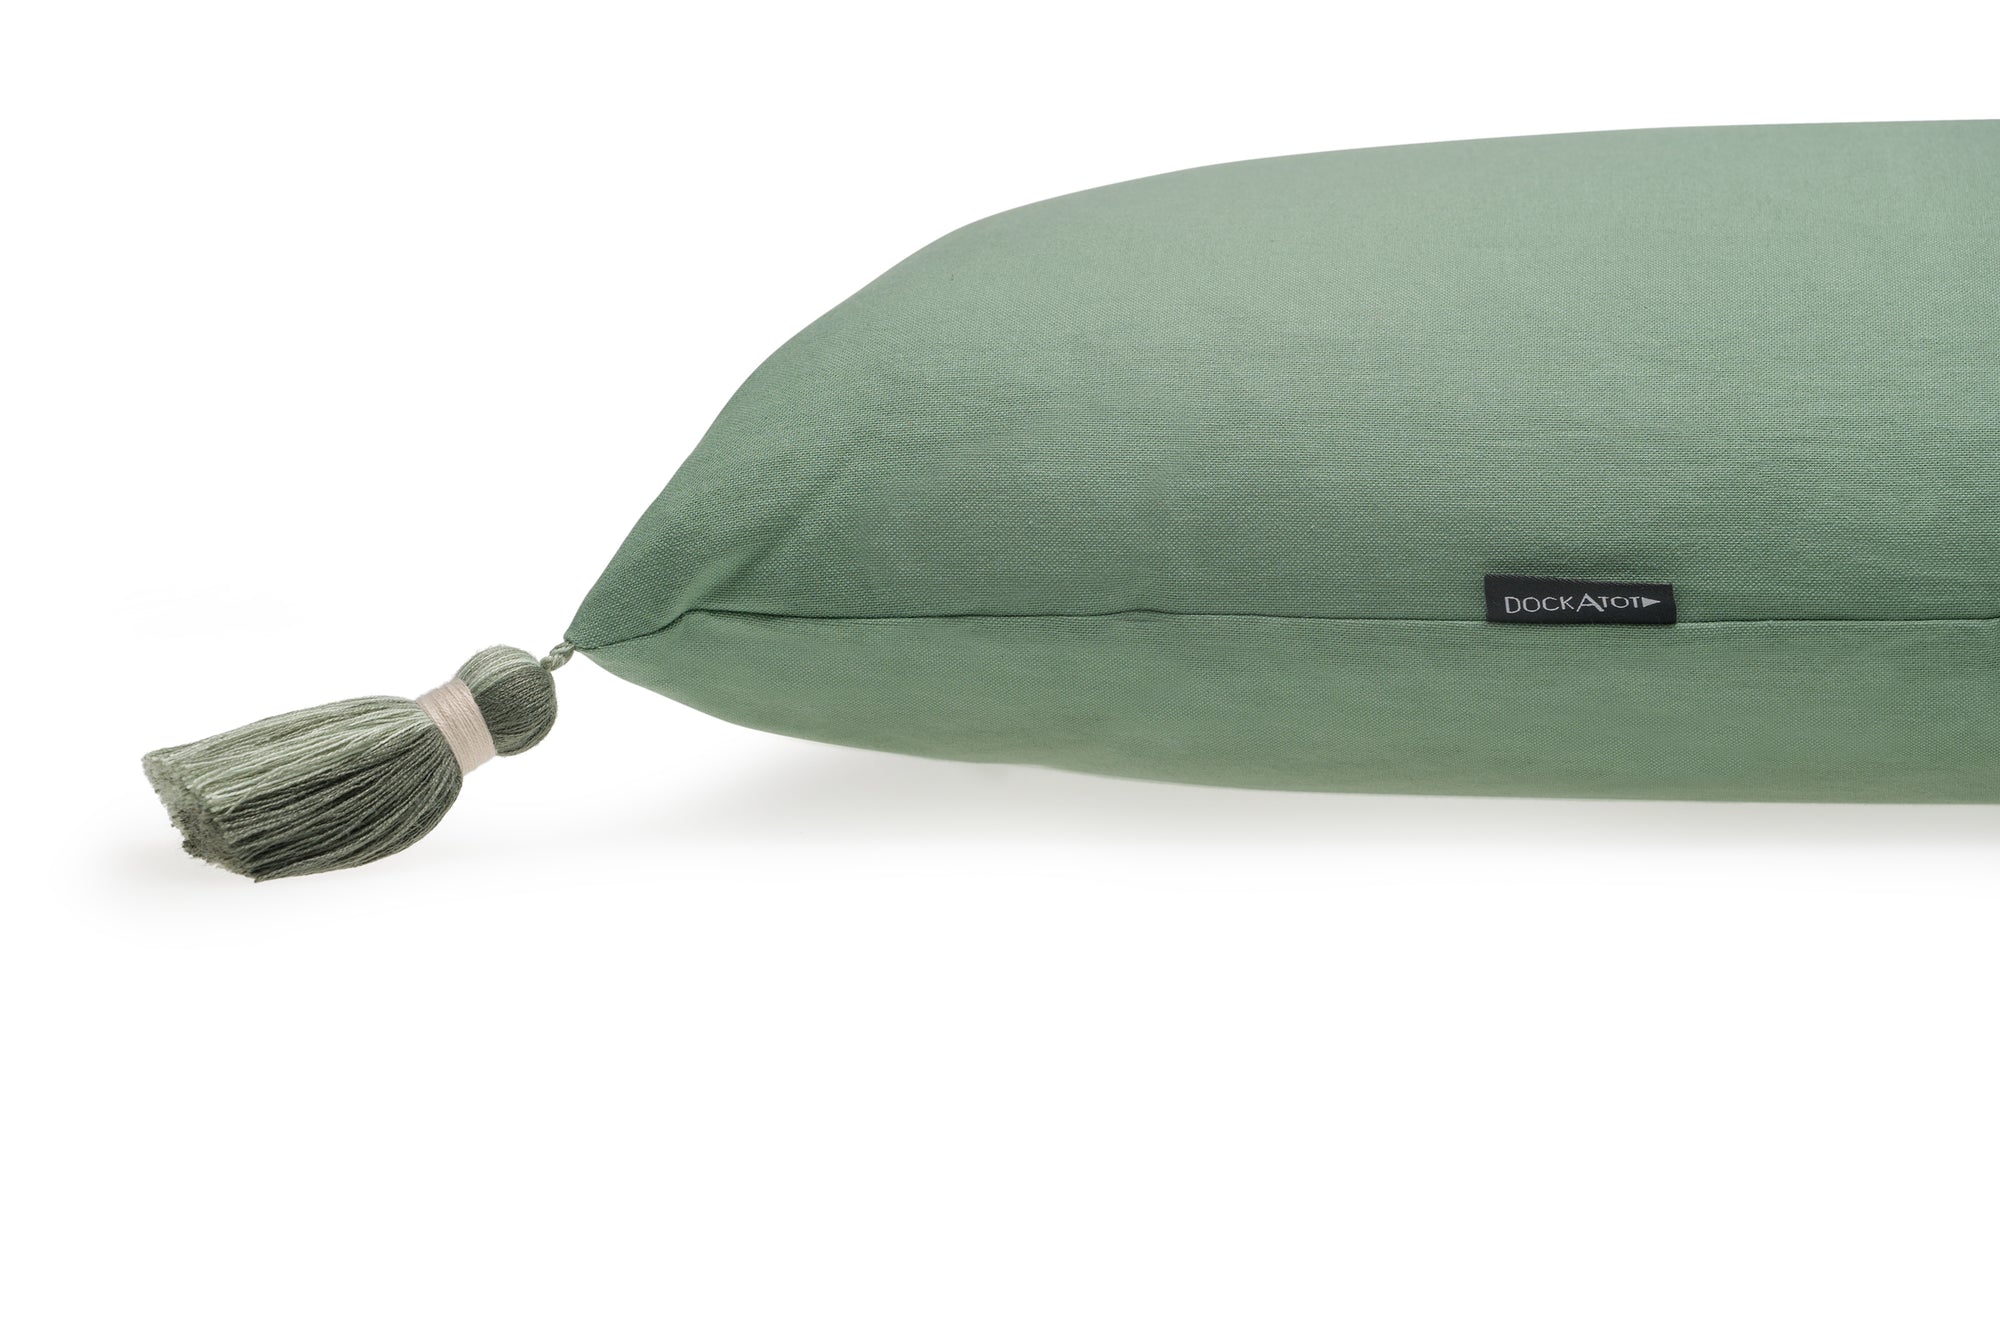 Cosset Body Pillow – Emerald Chambray